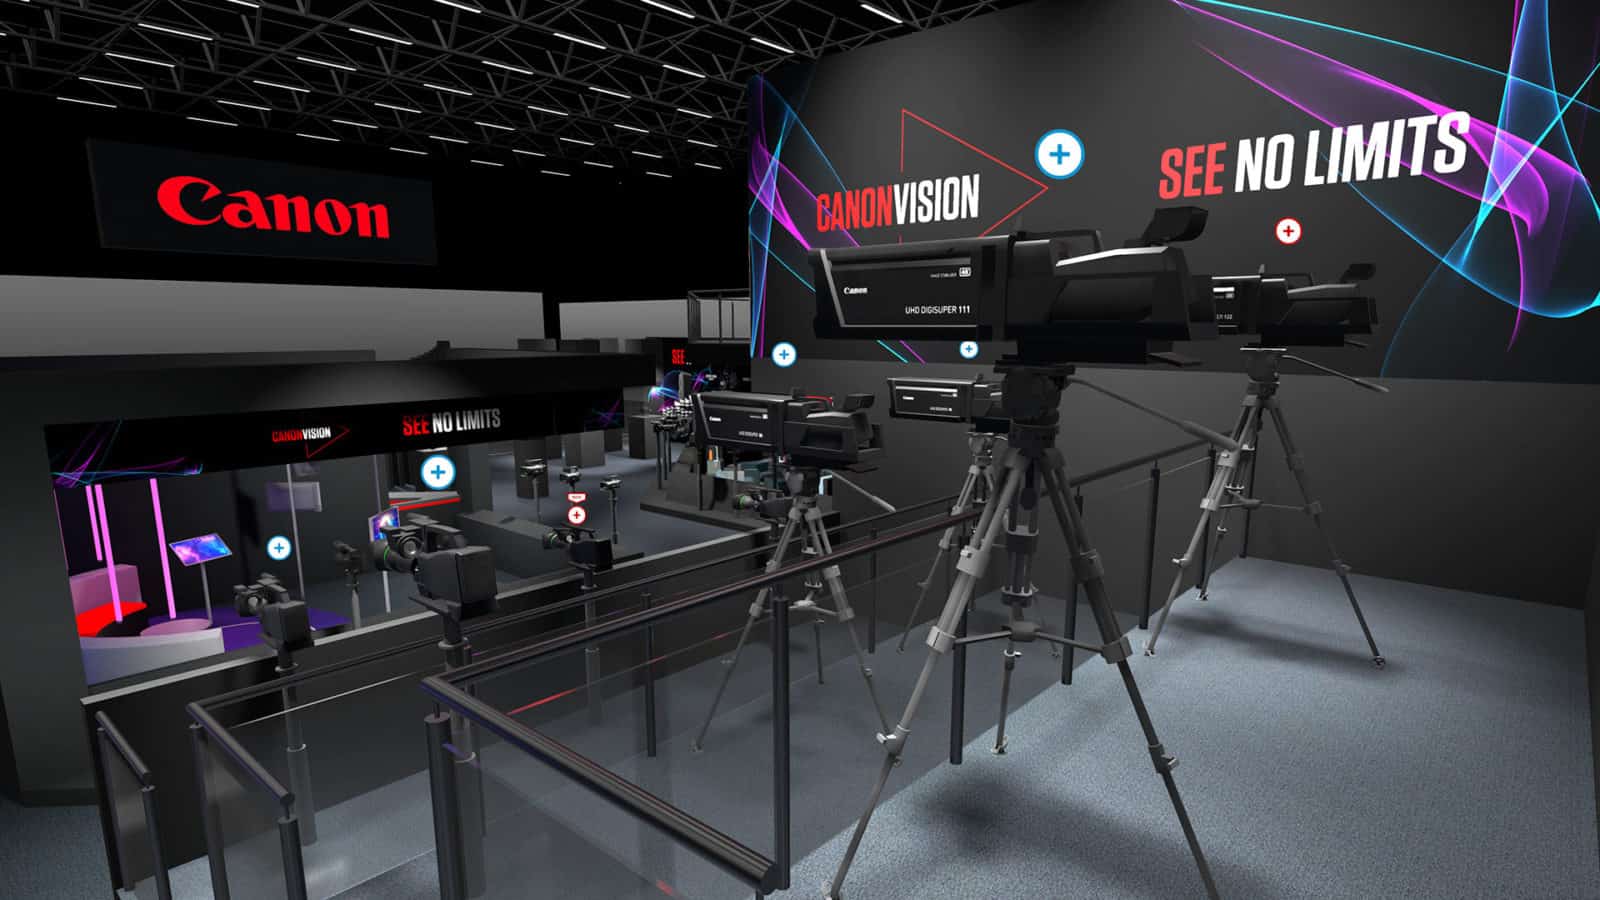 Canon Vision Virtual Trade show - BCTV Lens tower